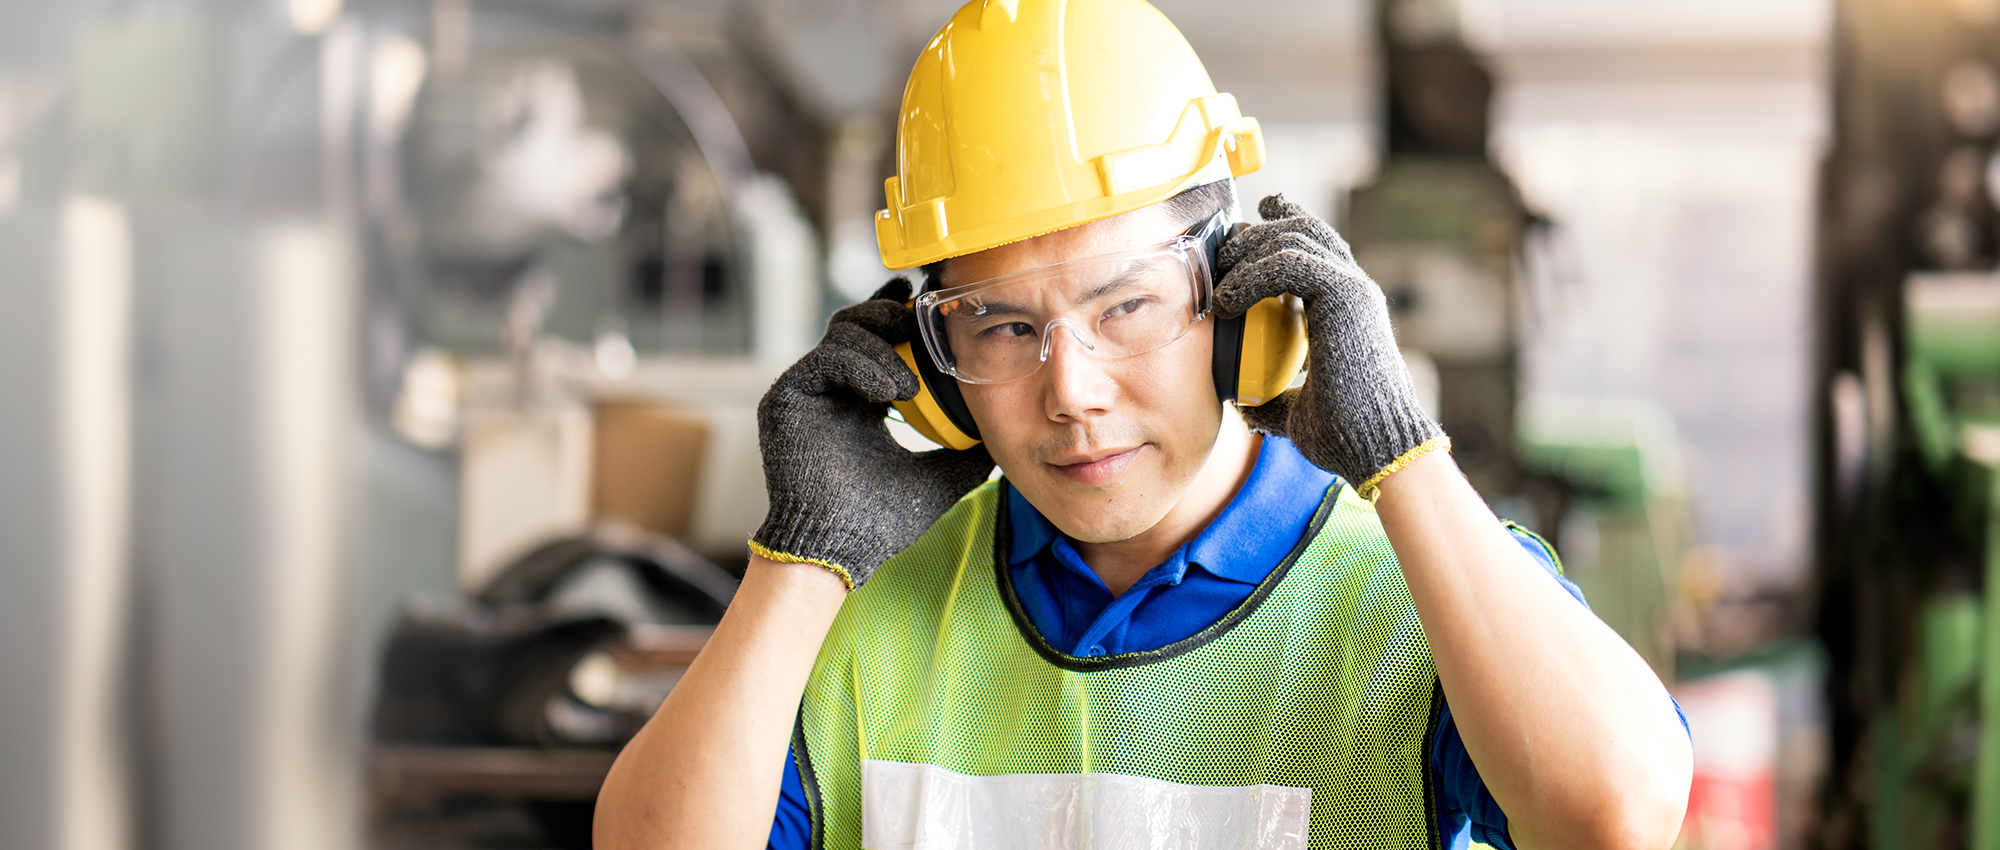 Worker adjusts hearing protective equipment.